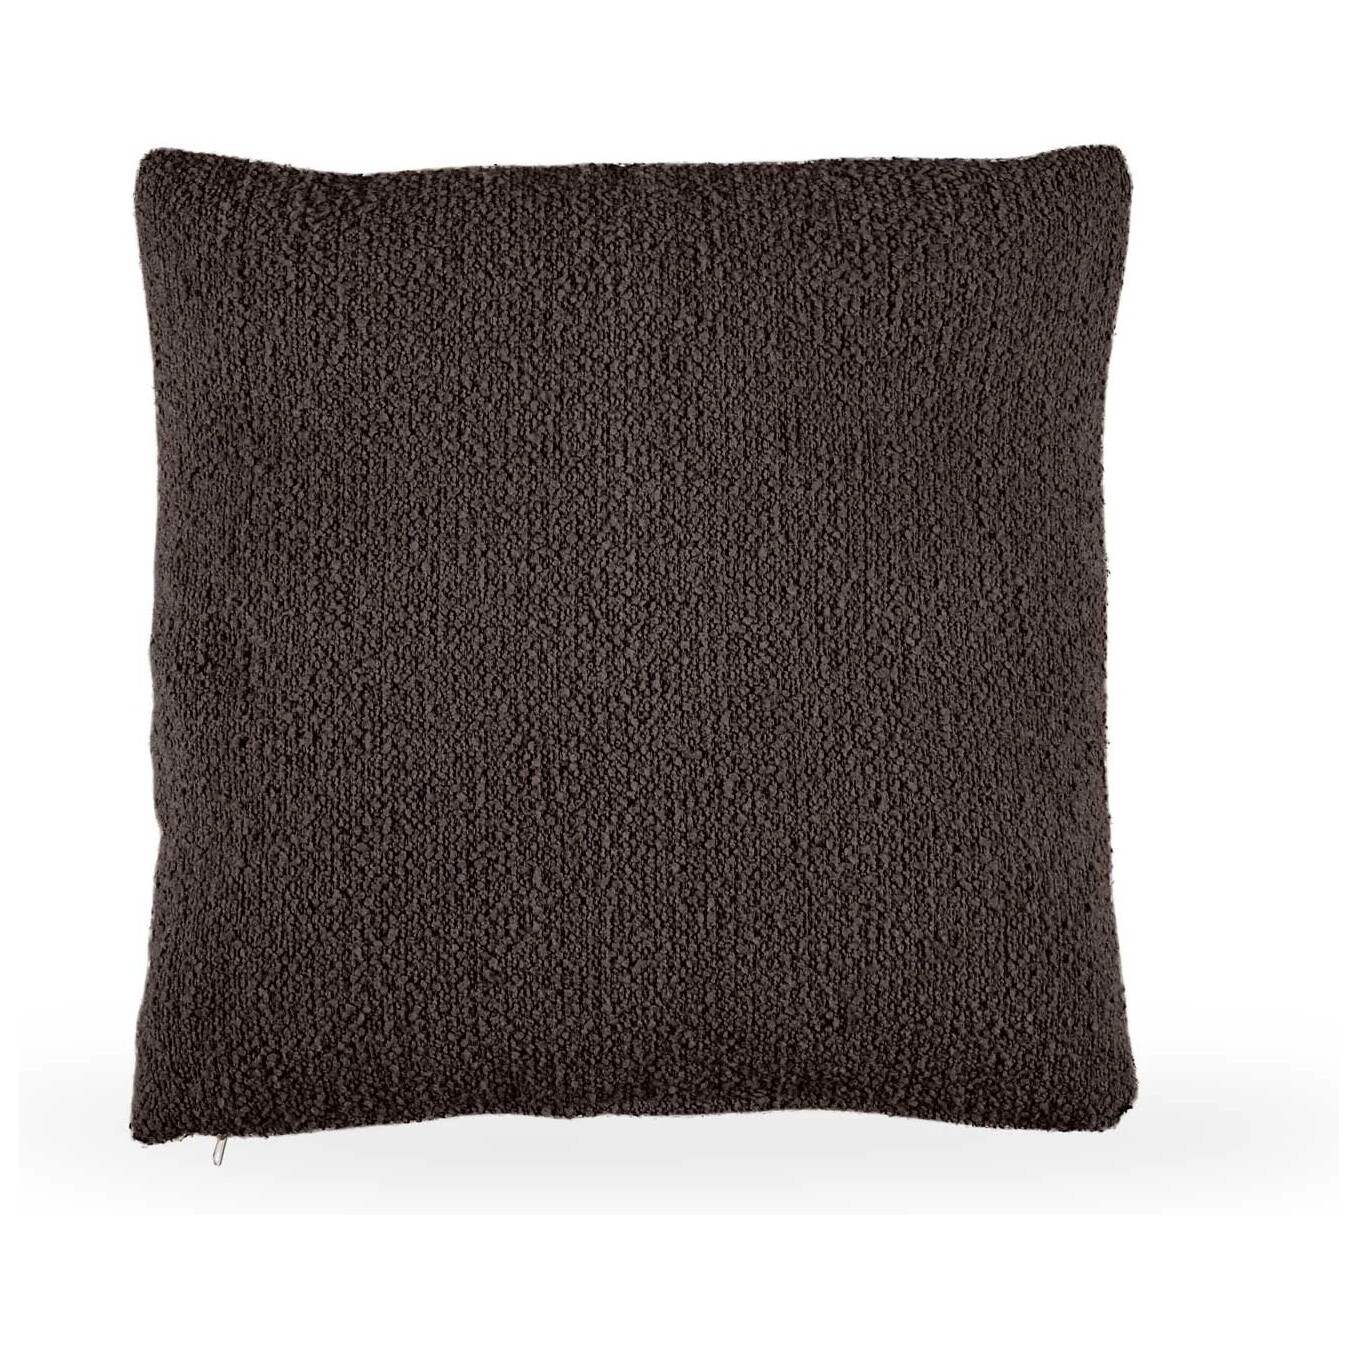 Подушка квадратная 60 см ткань Buckle braun коричневая Fabro